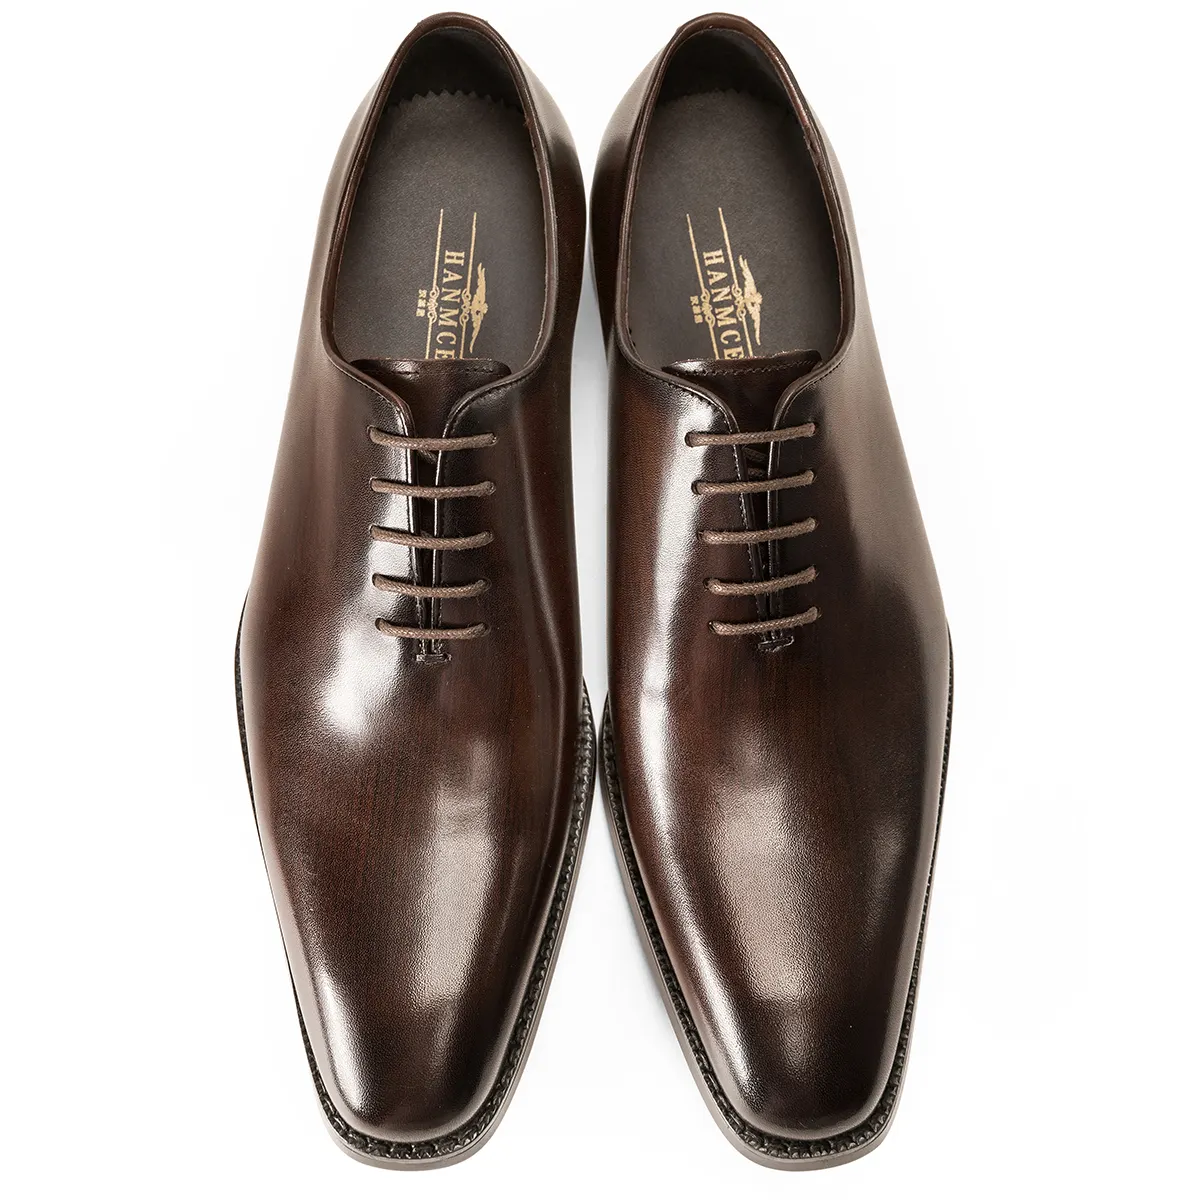 Hot sale men shoes loafers Cow Suede Leather Office shoes men Business wedding party men's dress shoes